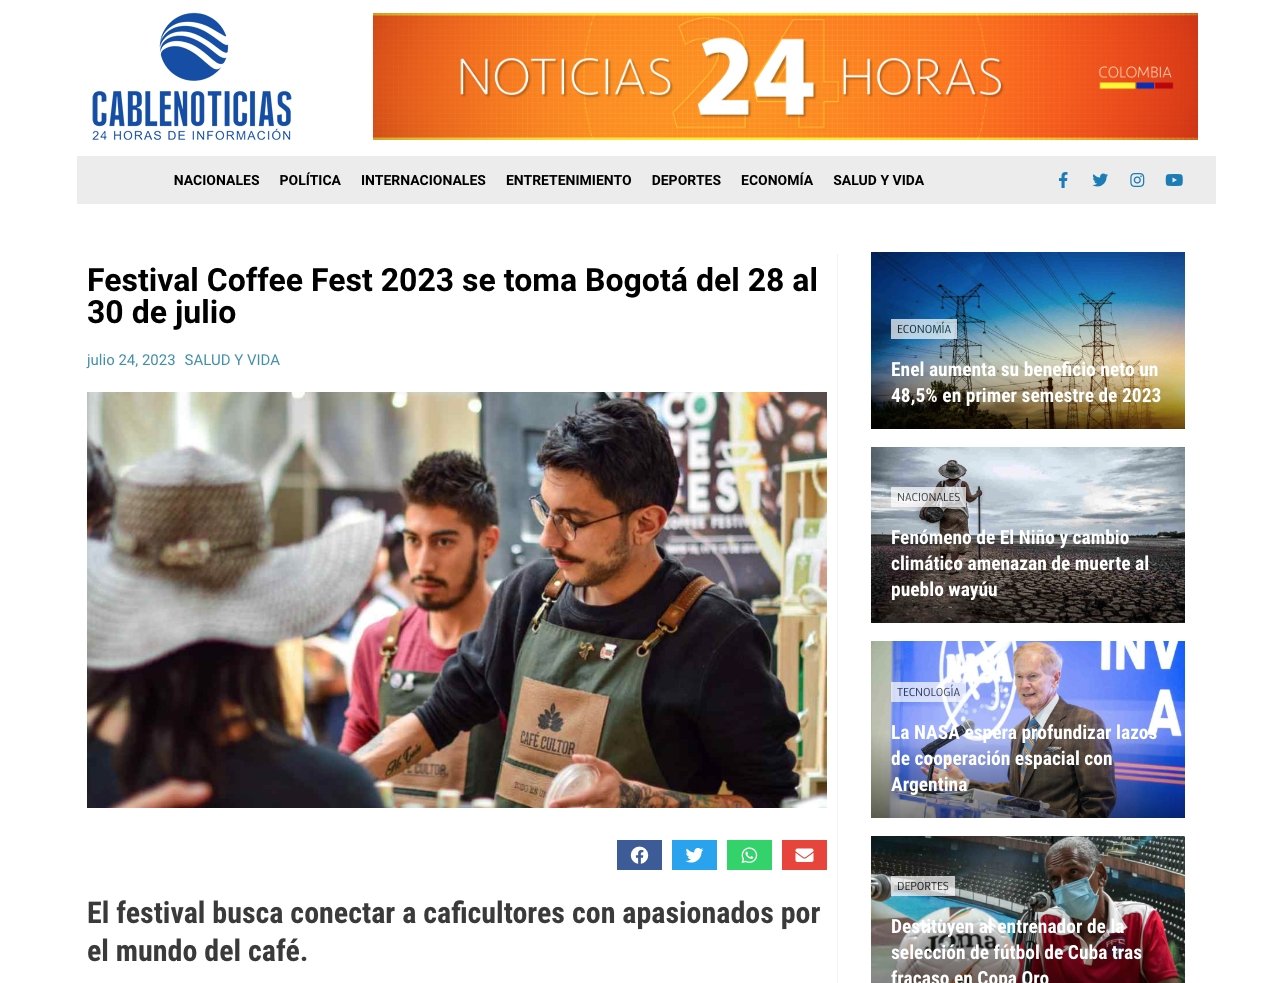 cablenoticias.tv: Festival Coffee Fest 2023 se toma Bogotá del 28 al 30 de julio